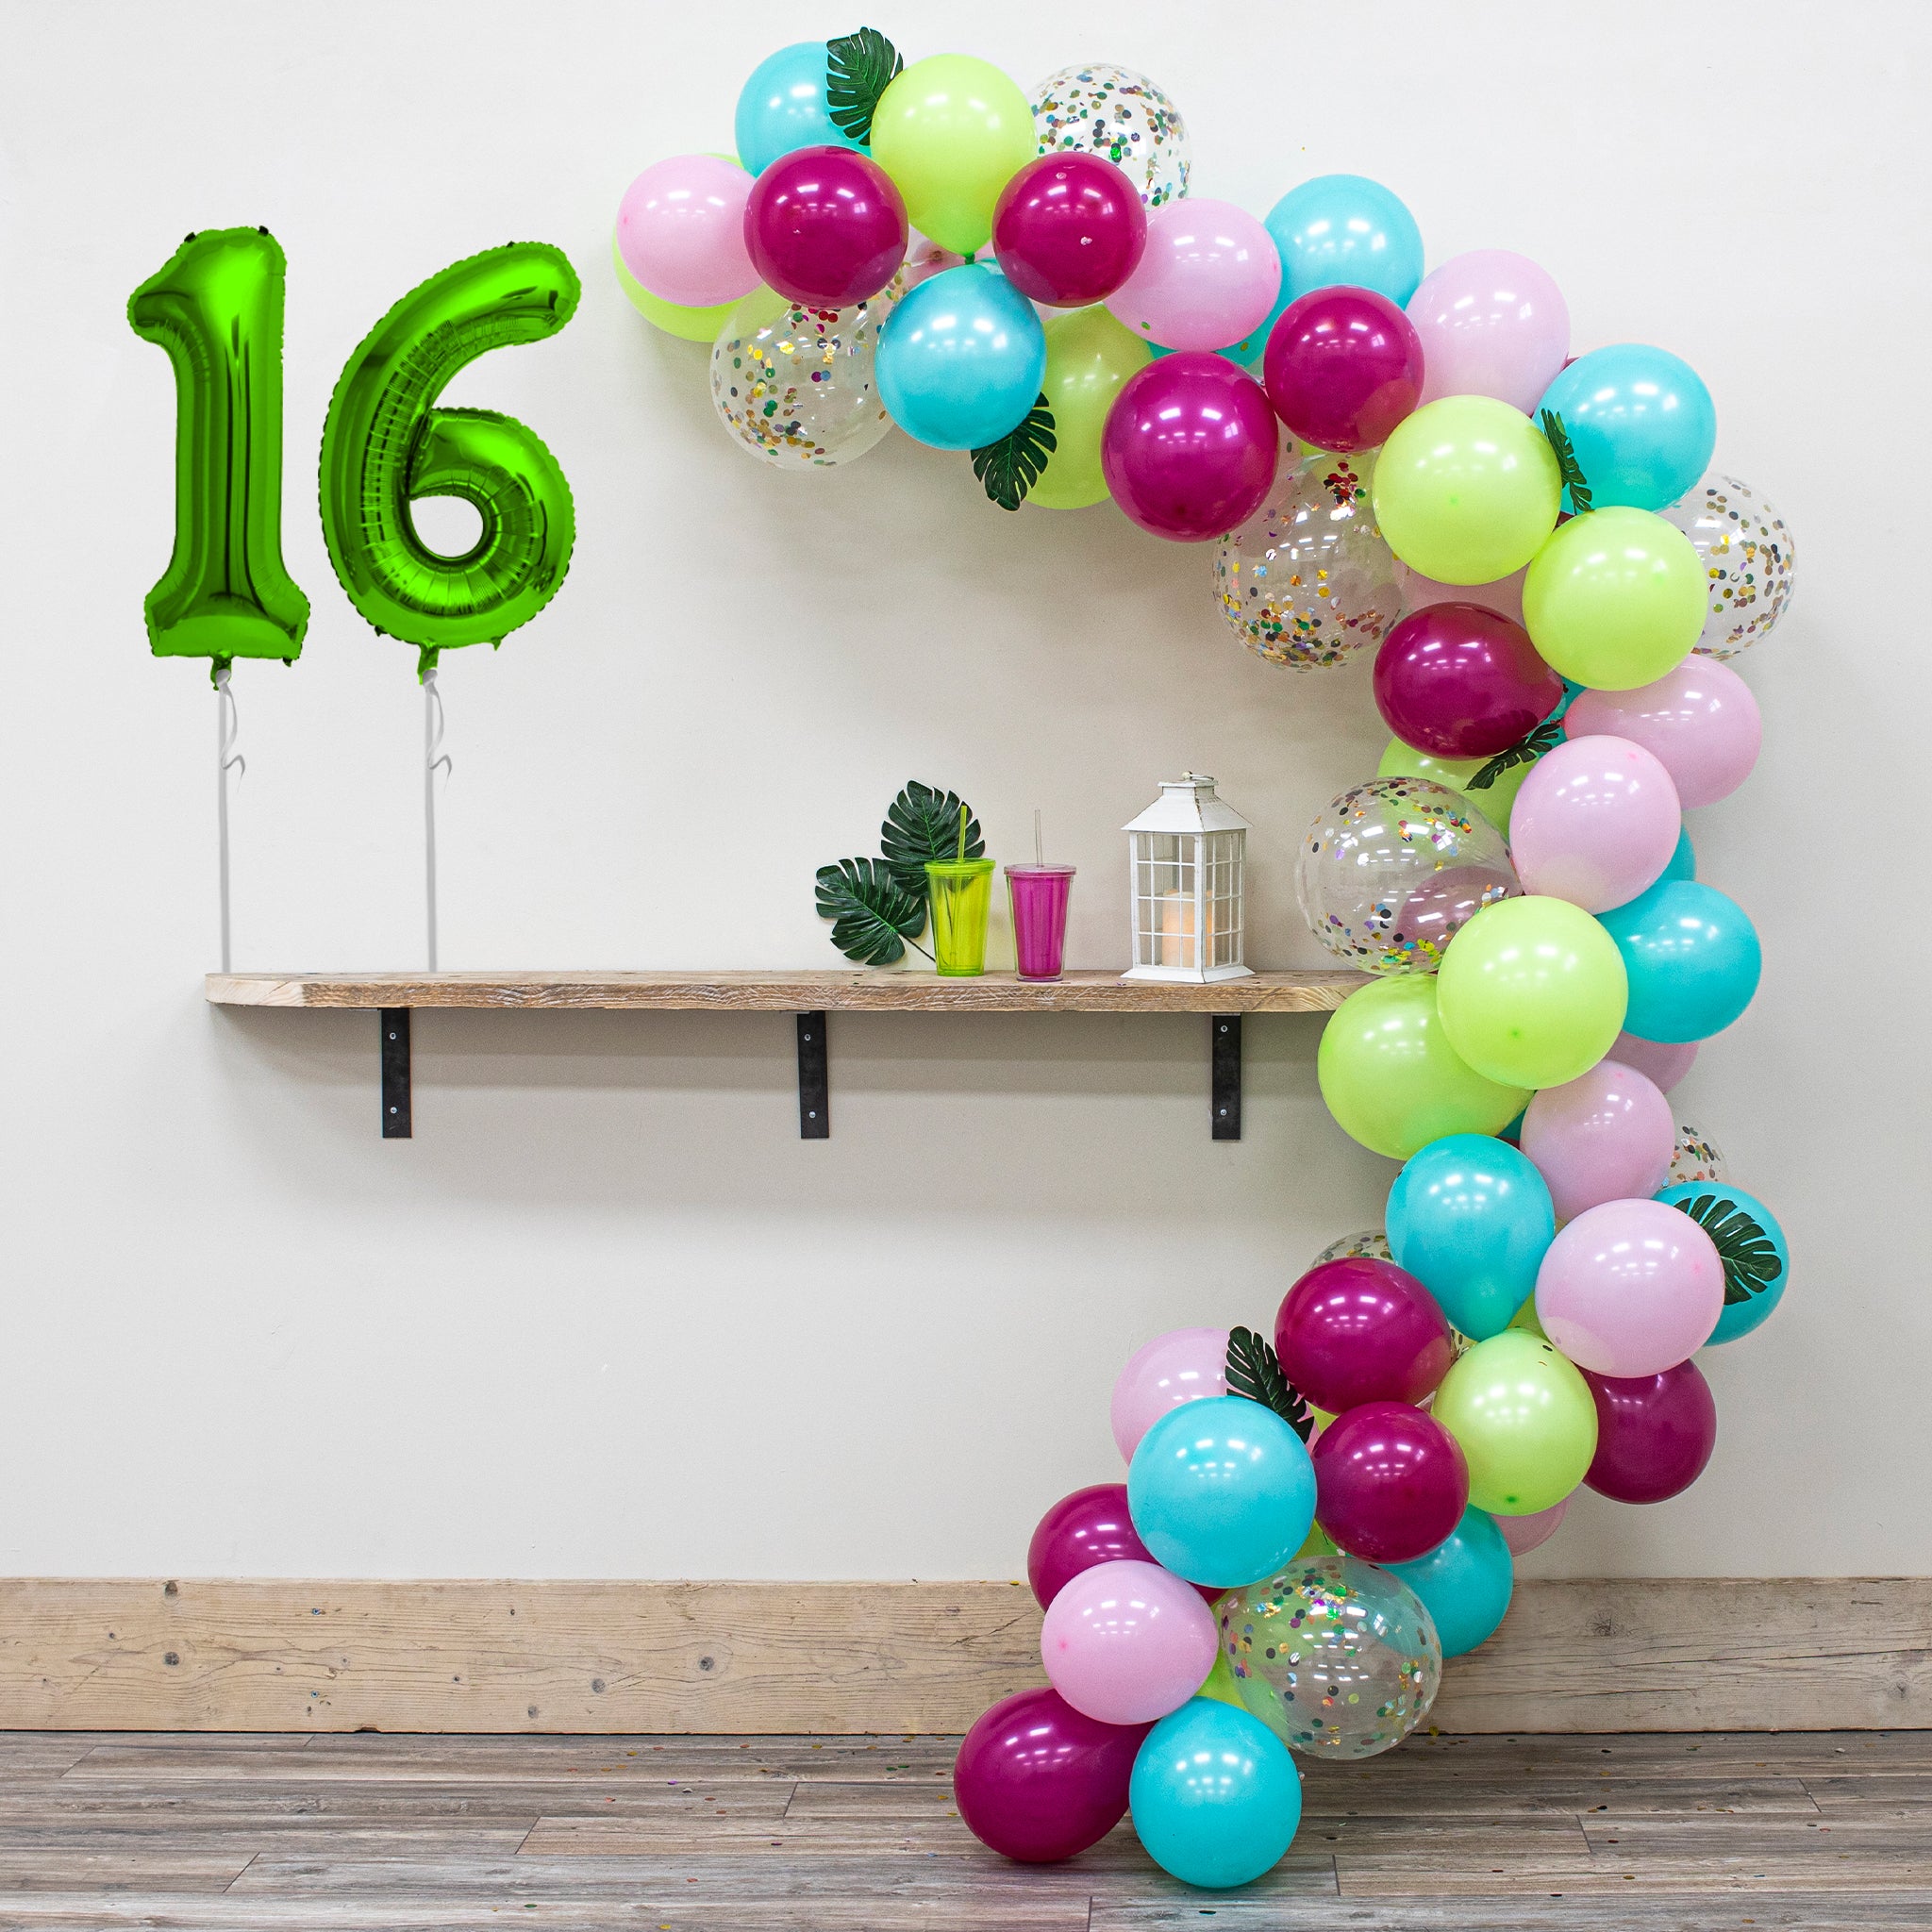 16th Birthday Hawaiian Tiki Party Balloon Arch Decoration Kit - Includes 70+ Balloons